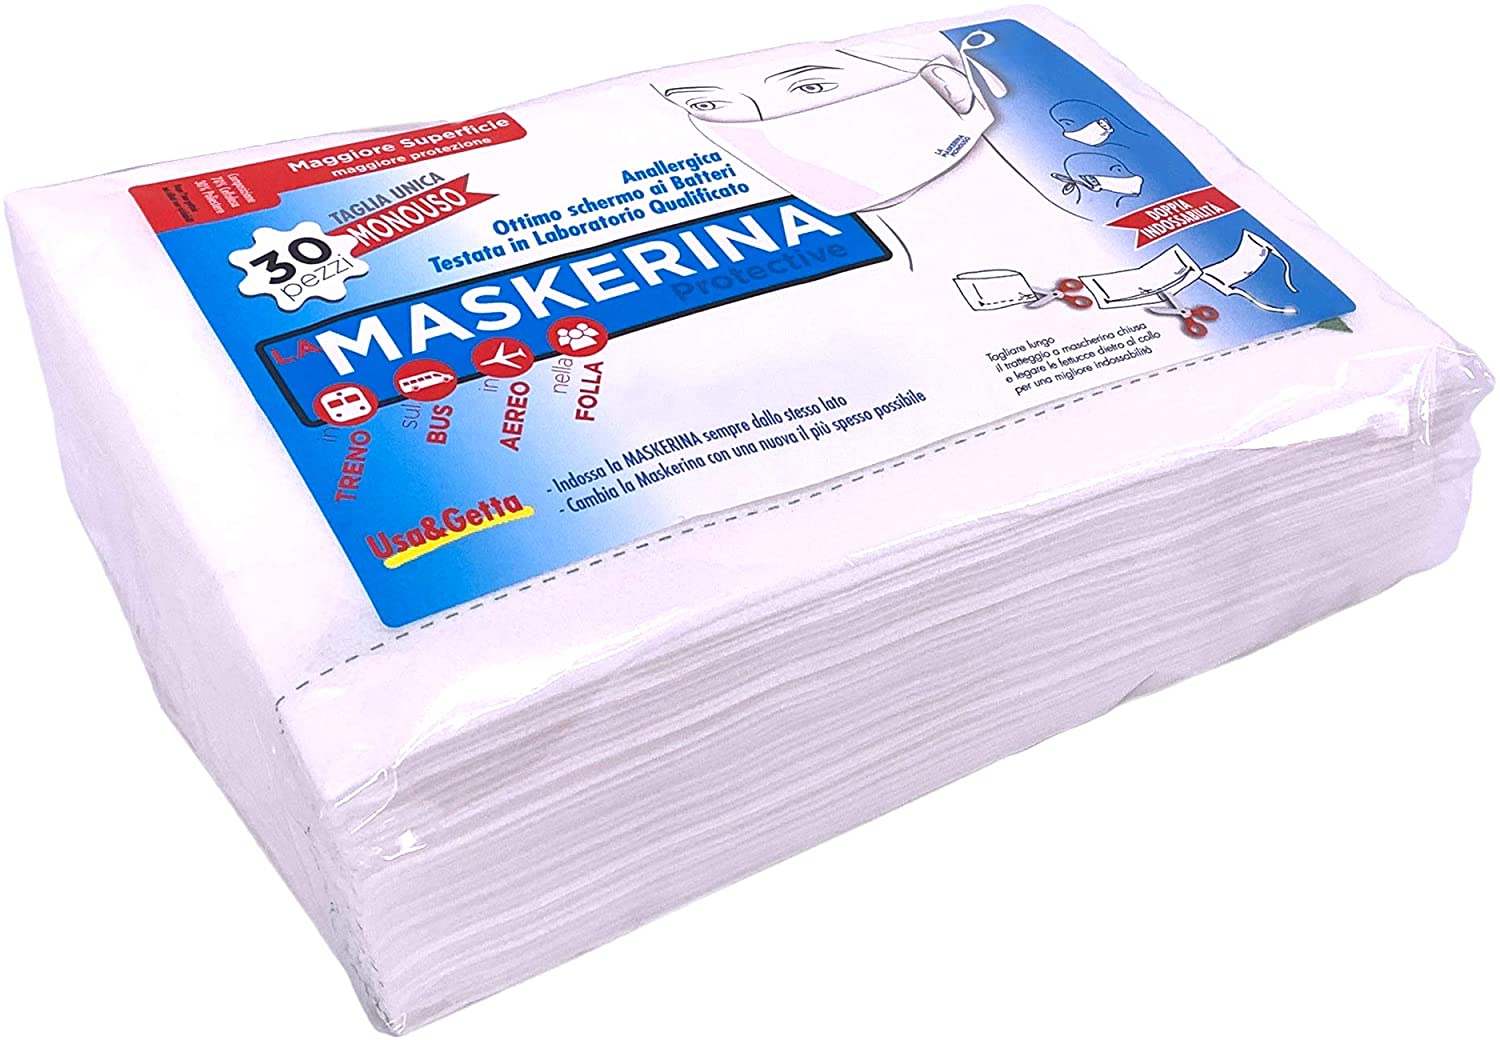 Fram Mascherine Monouso Protettive Antibatteriche - 200 Gr